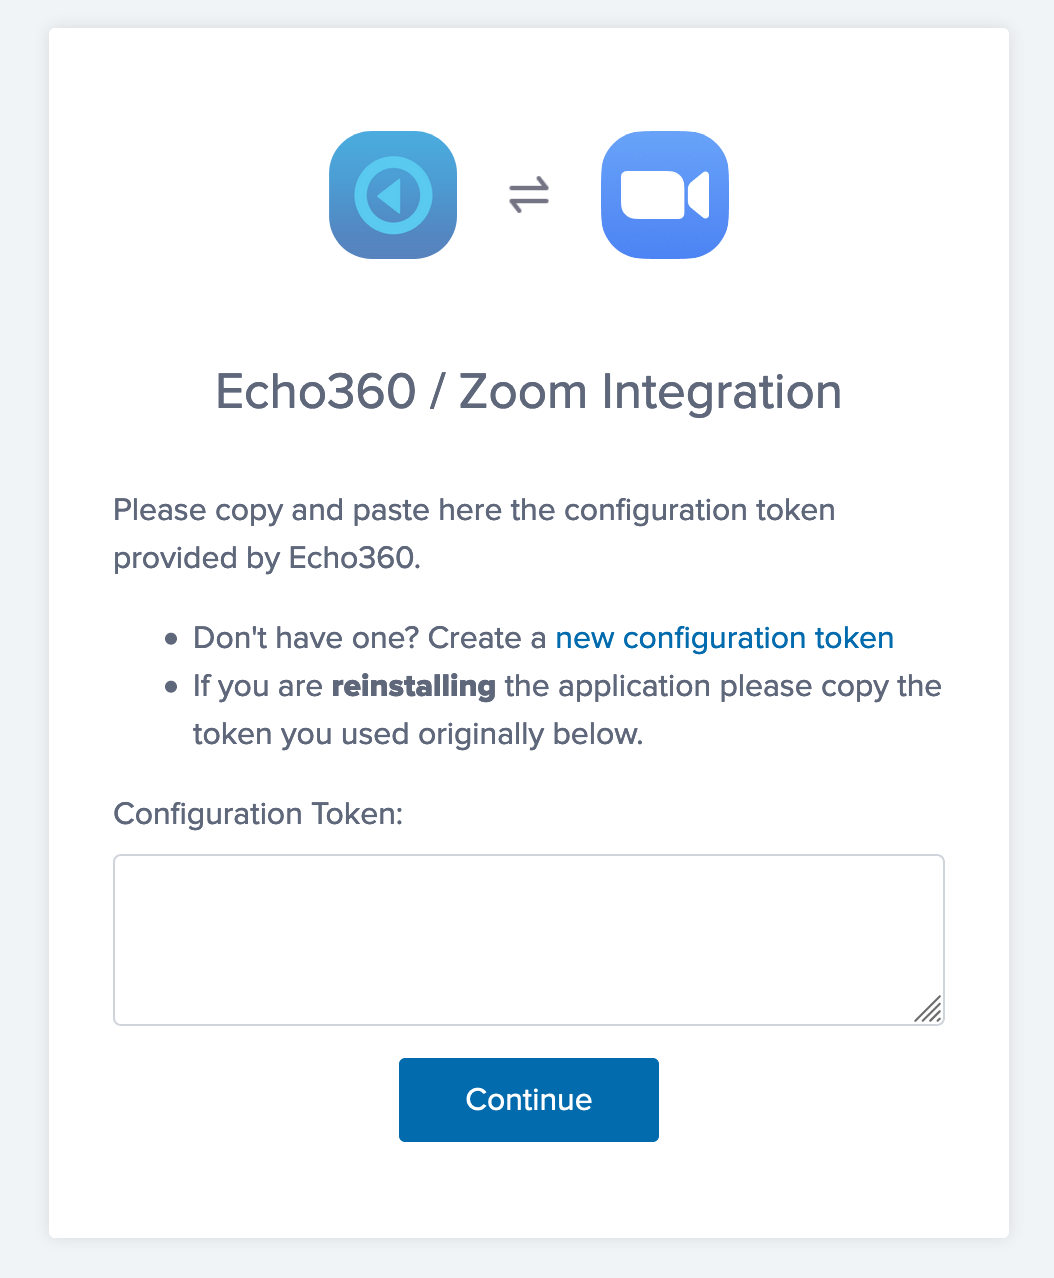 Zoom installation screen requesting EchoVideo configuration token as described